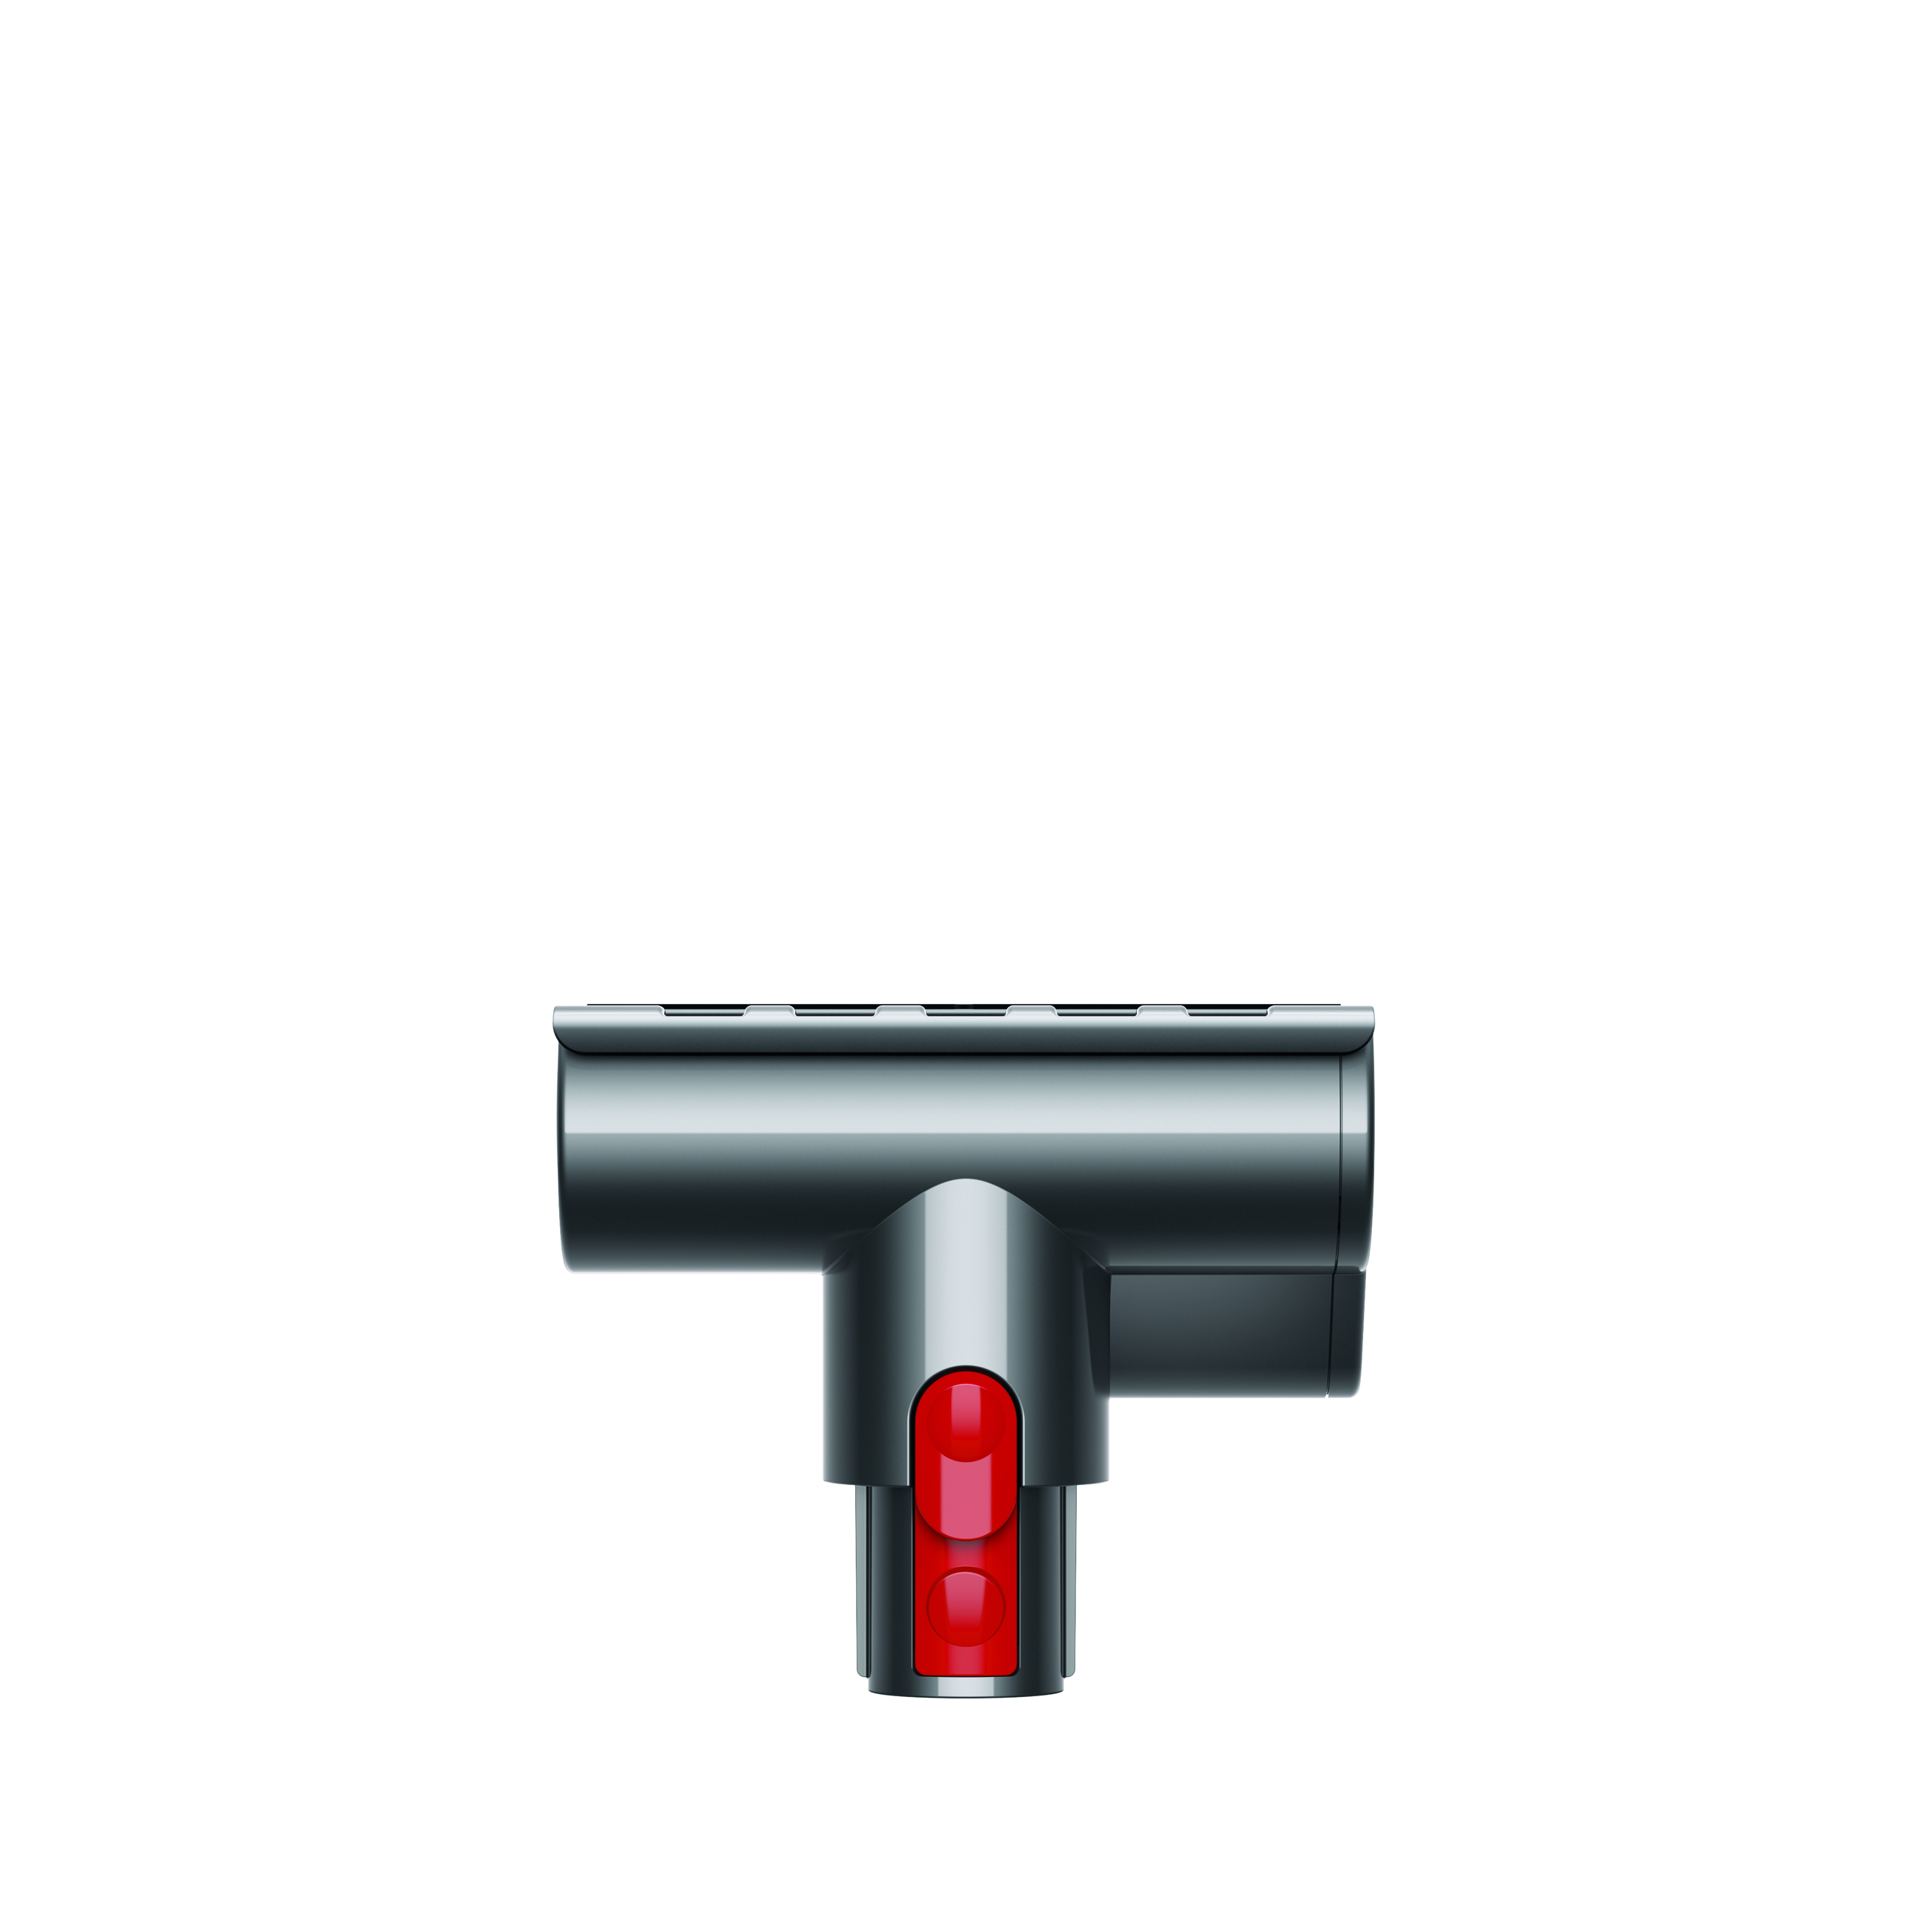 Aspiratore portatile Dyson V8 Animal+ Nichel, Titanio [248367-01]